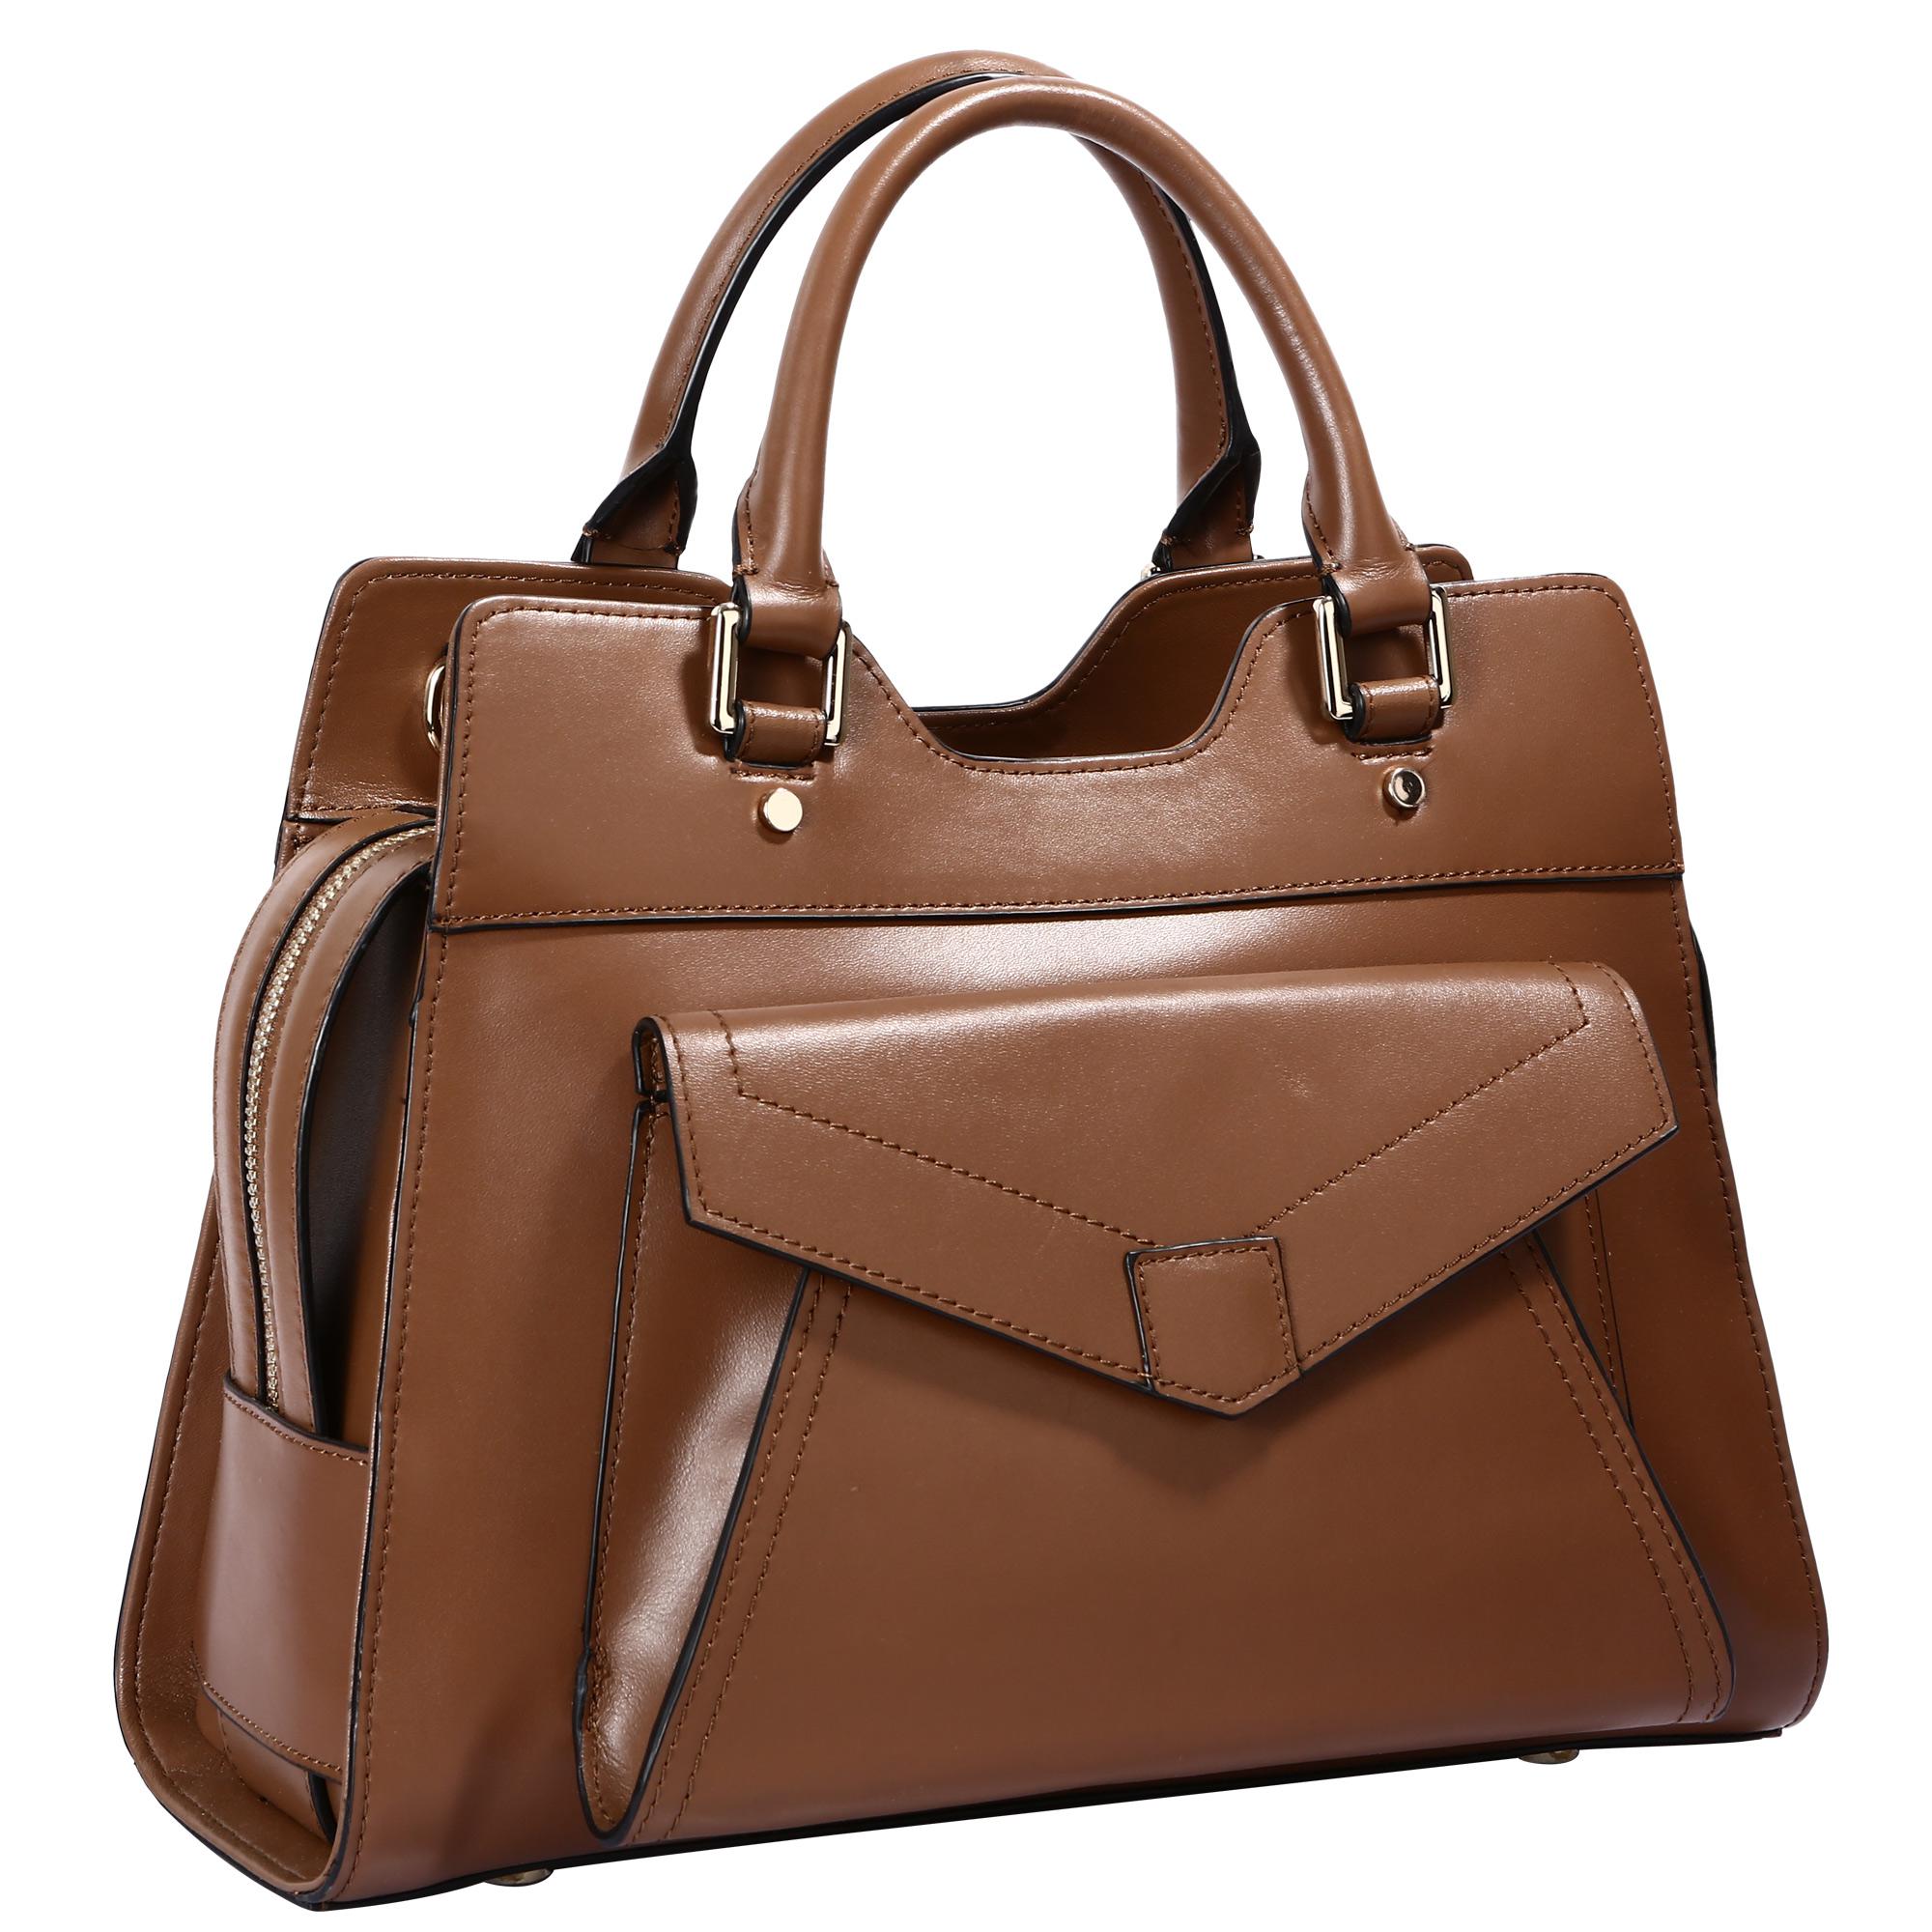 Коричневая сумка большая. Сумка женская Polar 50010121, коричневый. Сумка женская Pola 897f, коричневый. Pola Leather сумка. Кожаная сумка а&h 5113 Brown.